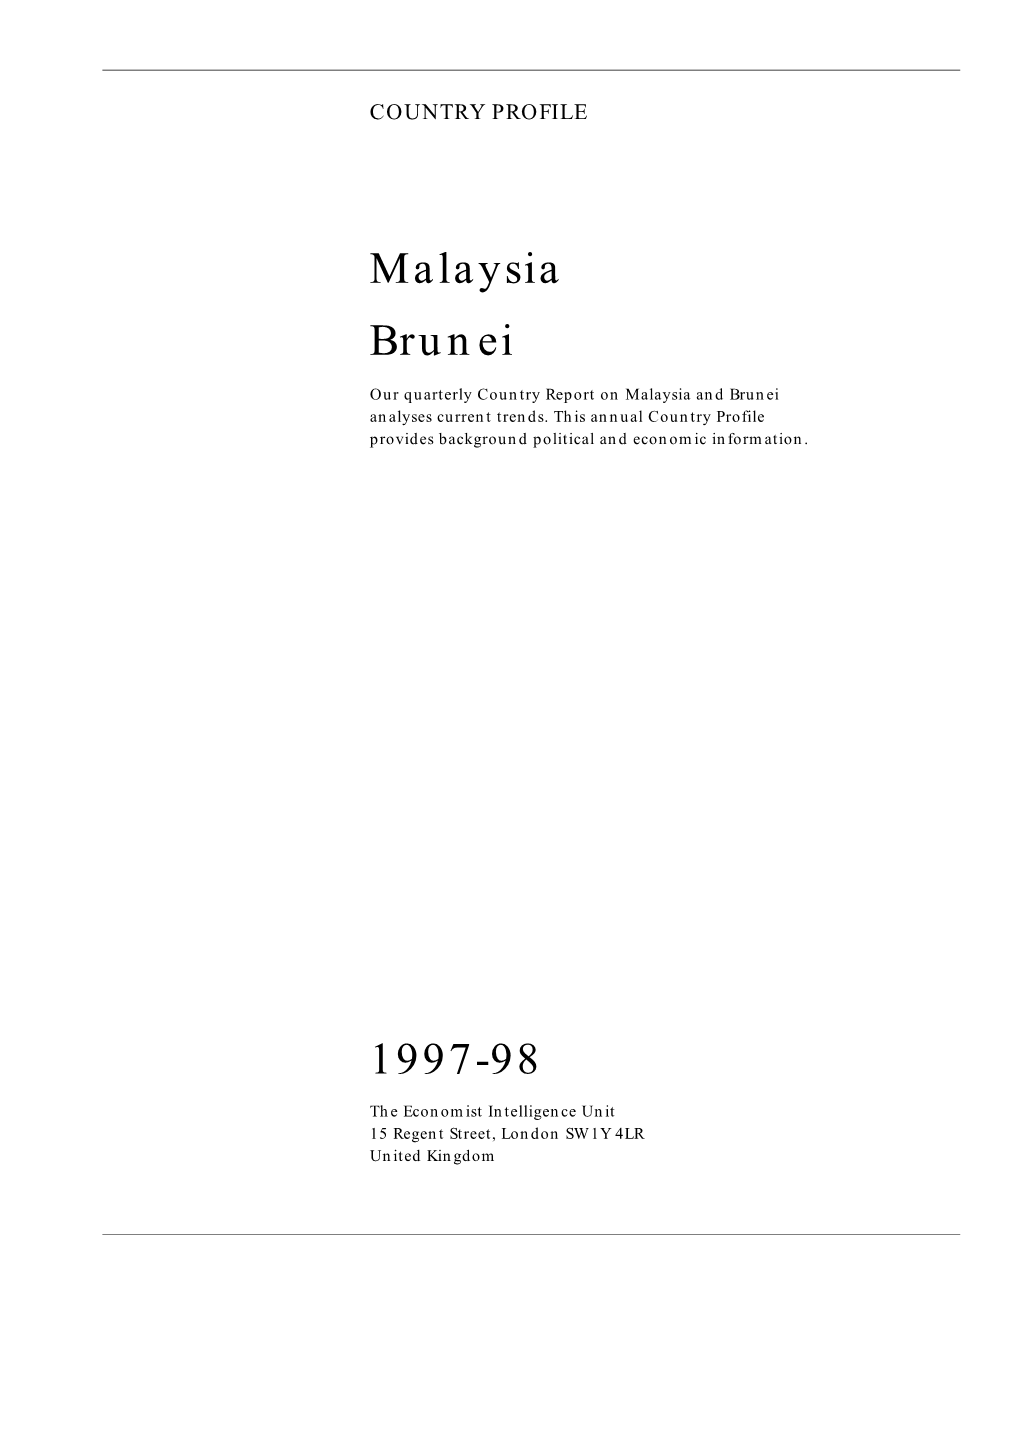 Malaysia Brunei 1997-98